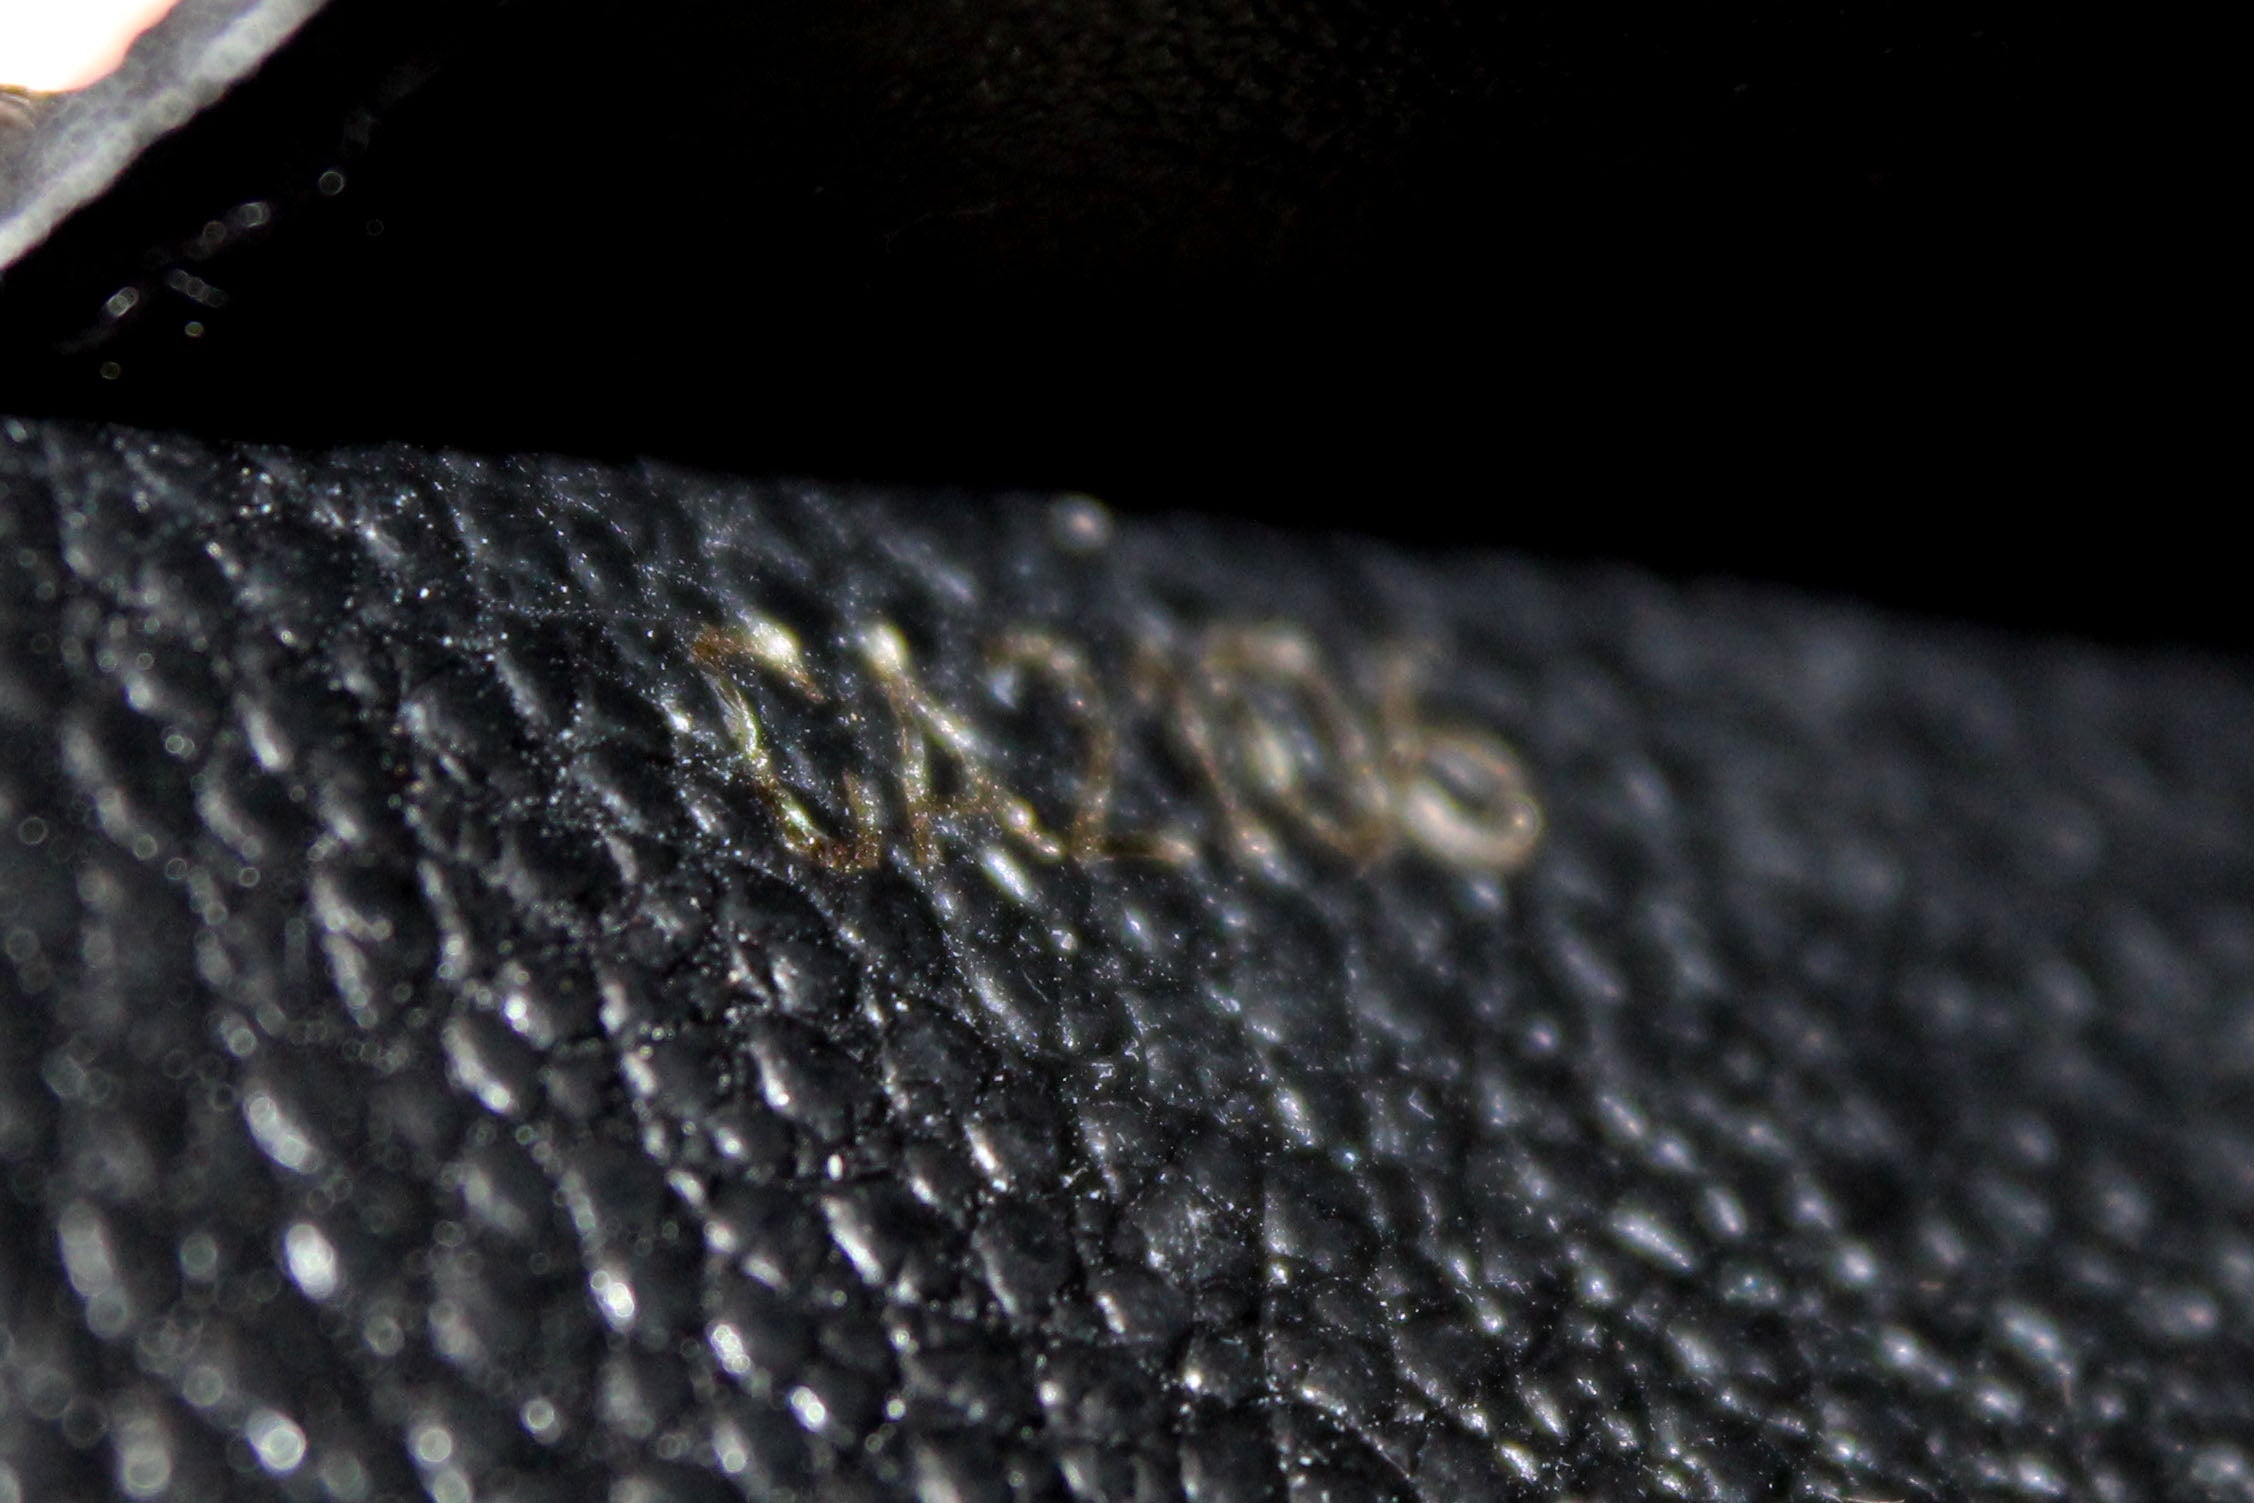 Authentic Louis Vuitton Black Empreinte Monogram Leather Business Card Holder